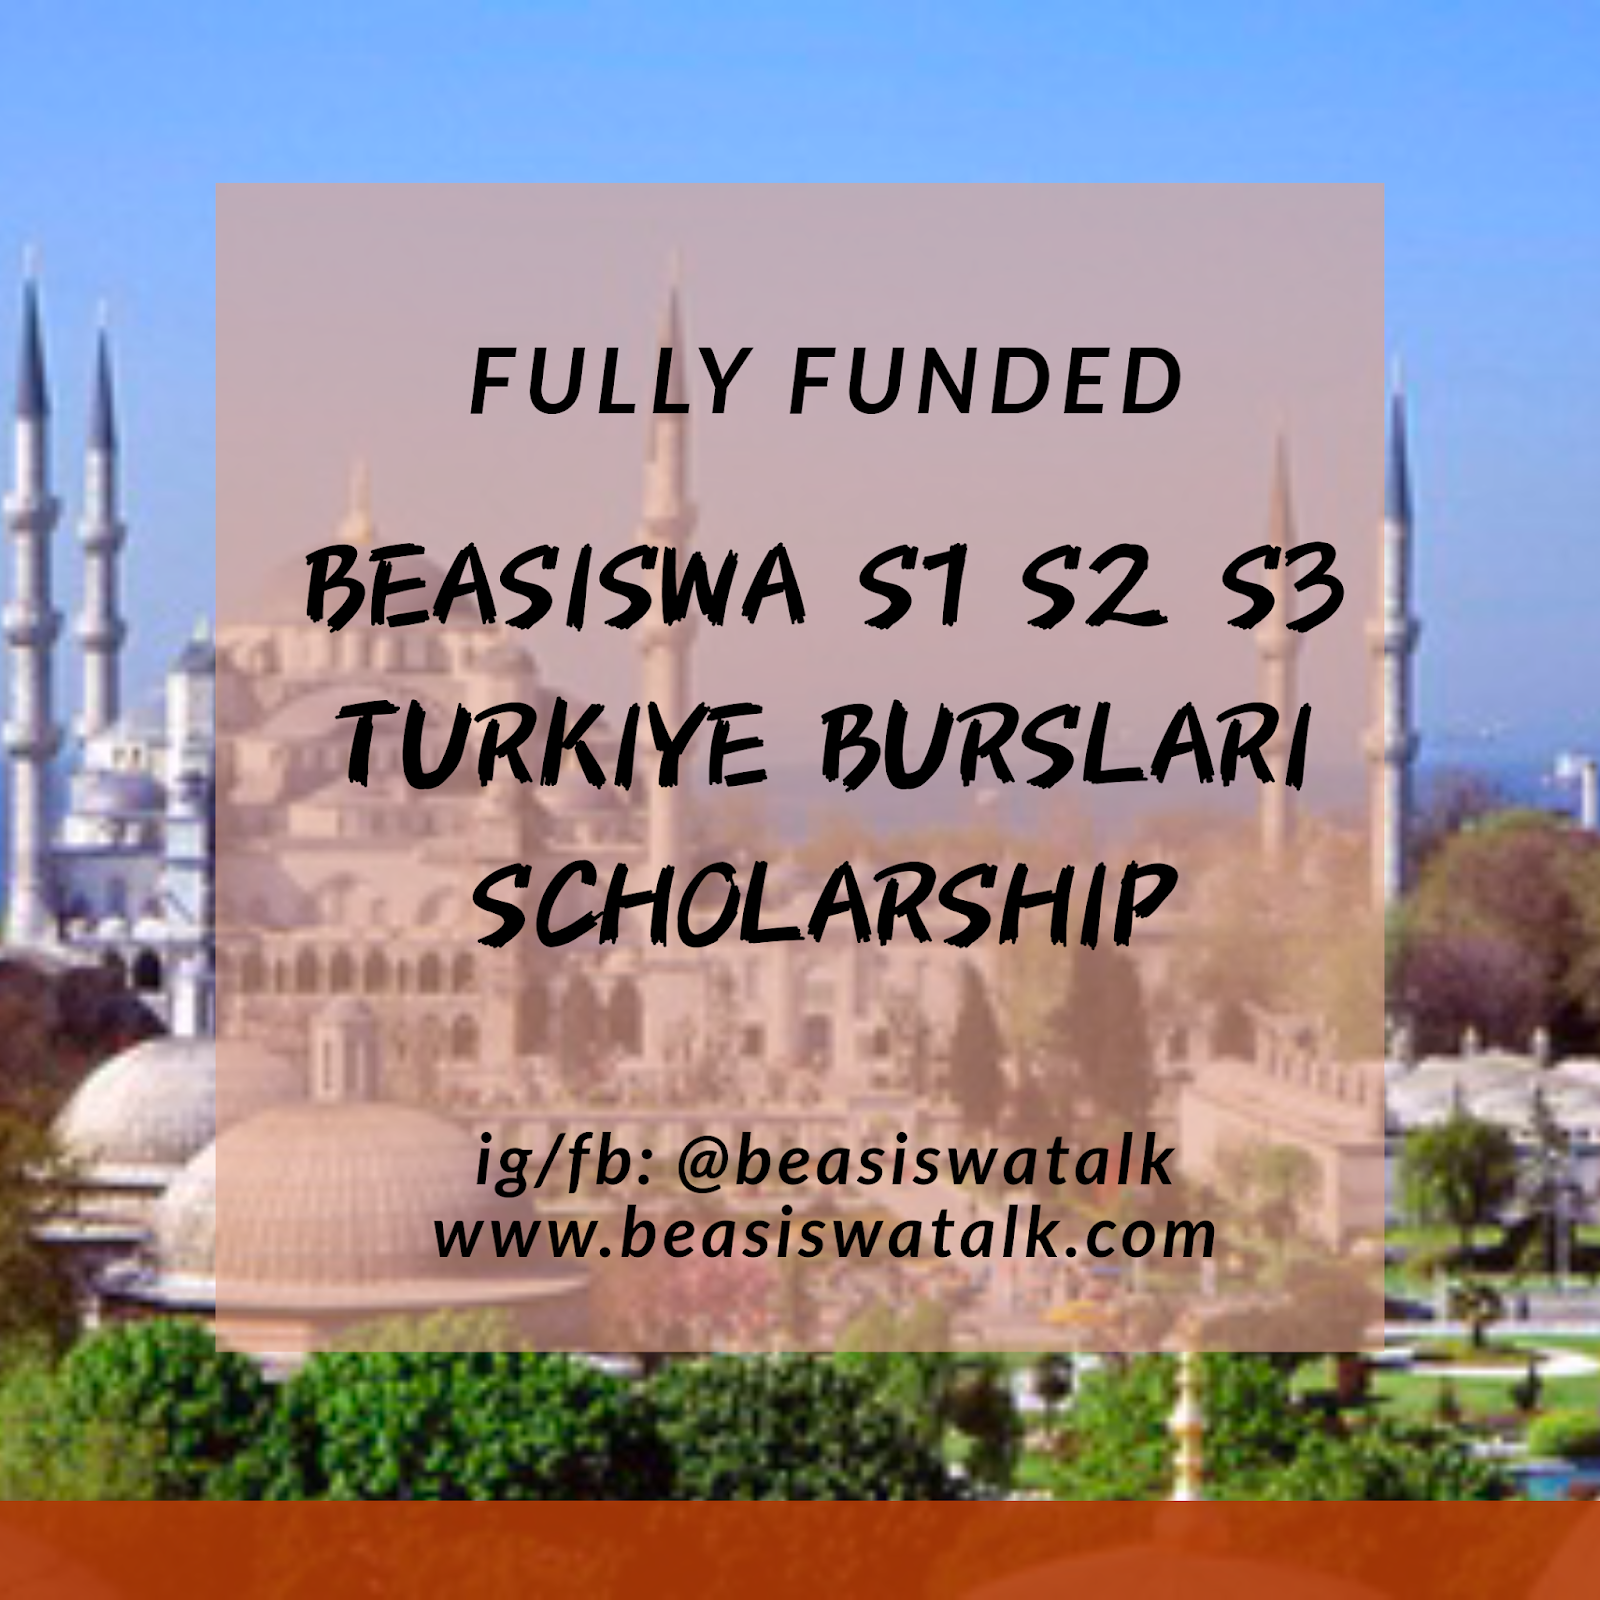 Fully Funded Beasiswa Turkiye Burslari Untuk S1 S2 Dan S3 - Beasiswatalk